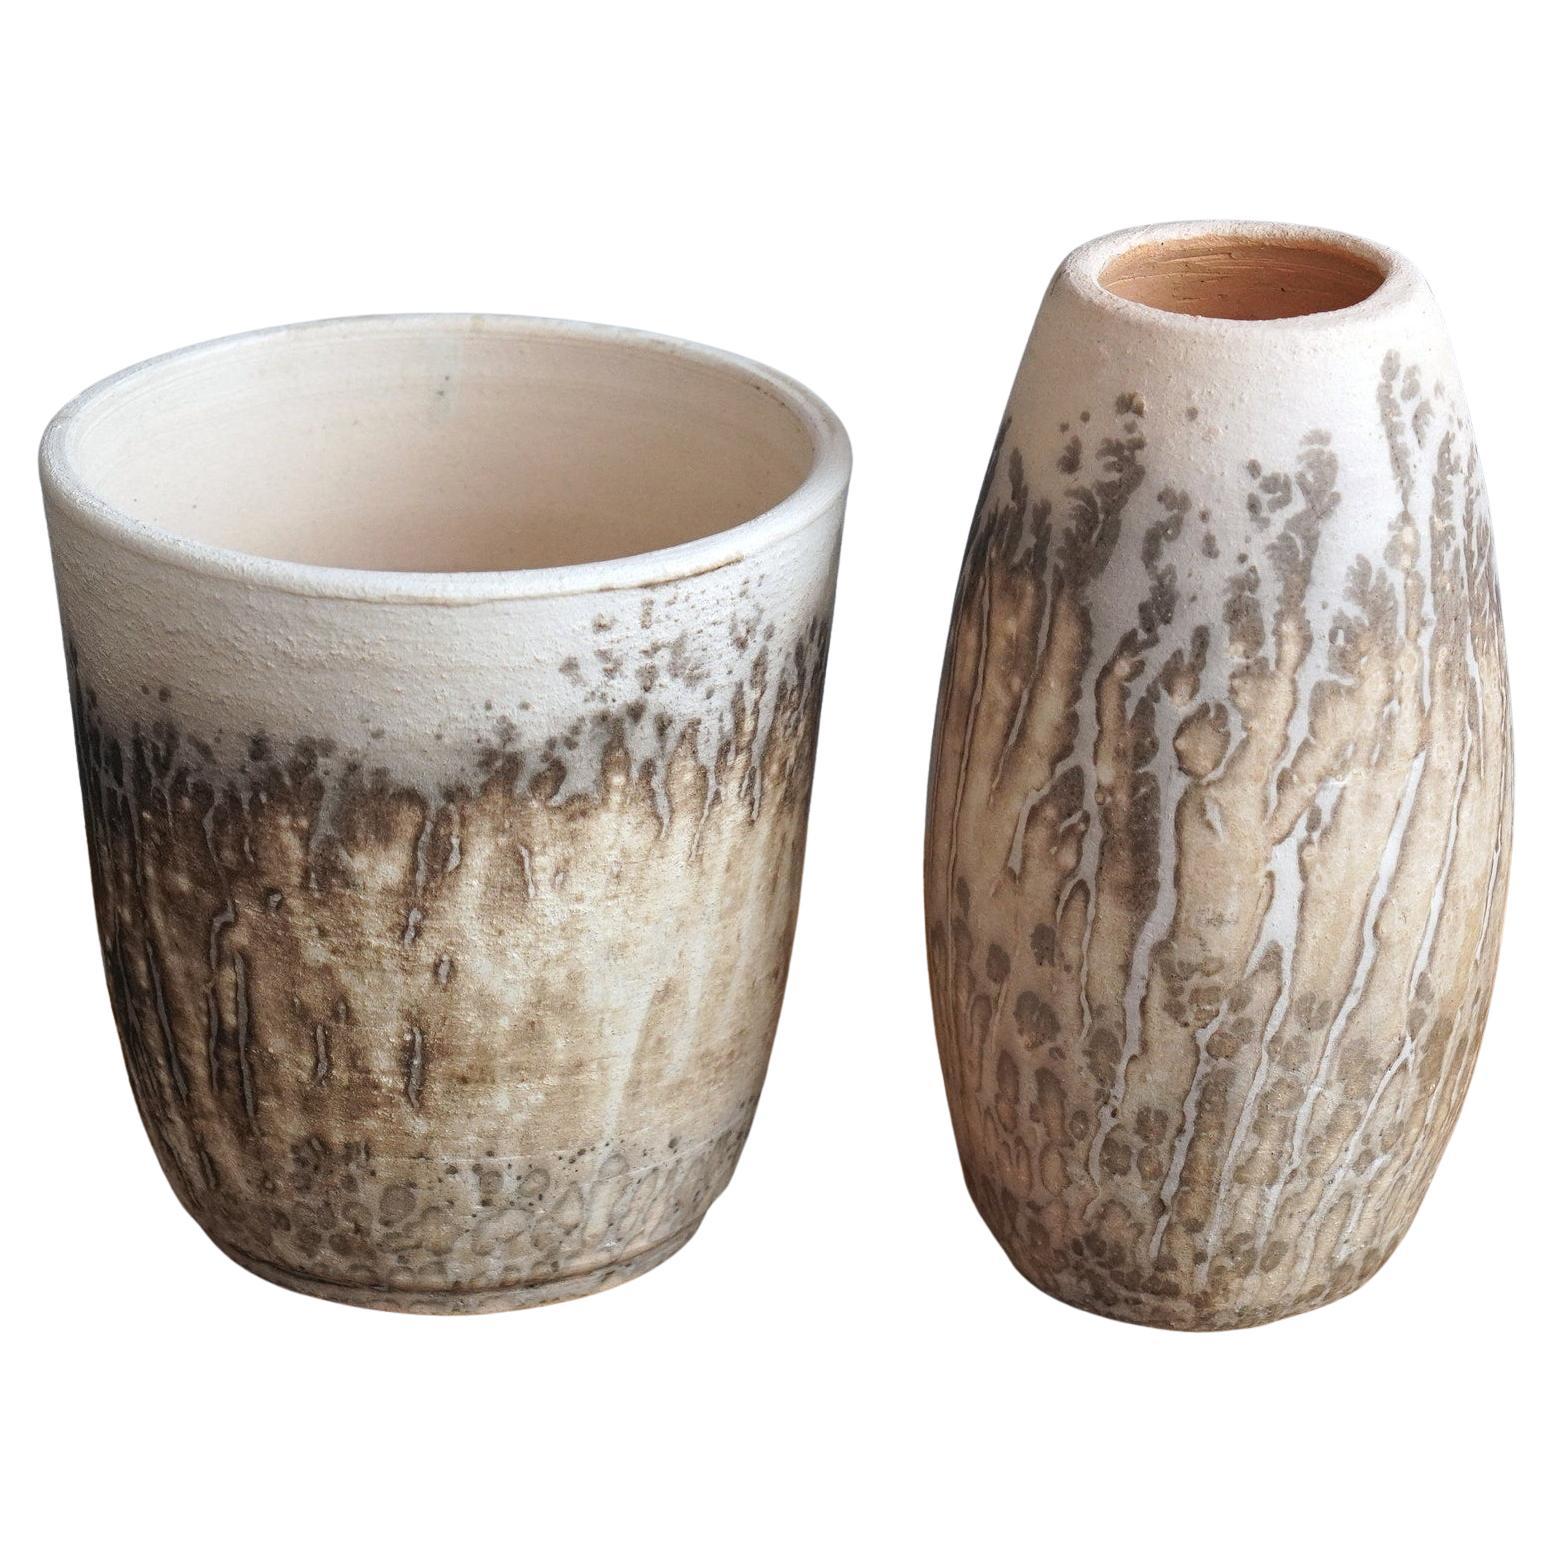 Shinsen & Tsuri Raku Keramikvase - Obvara - Handgefertigtes Keramik-Hausdekor